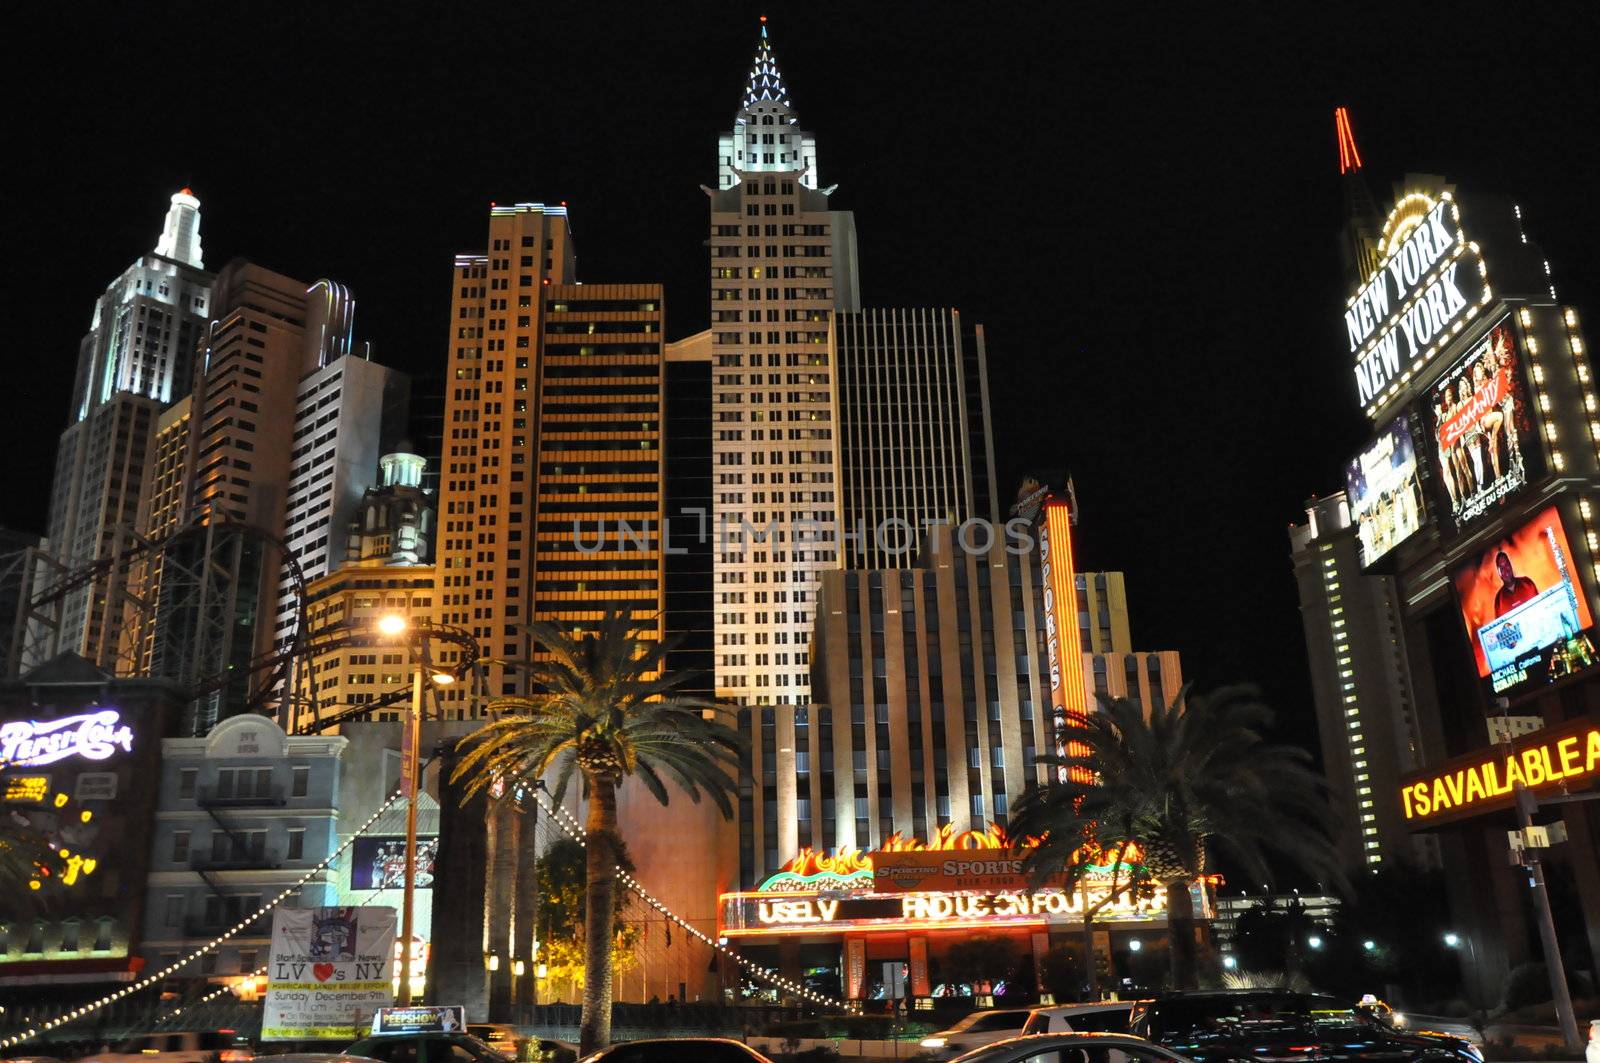 New York New York Hotel and Casino in Las Vegas, Nevada